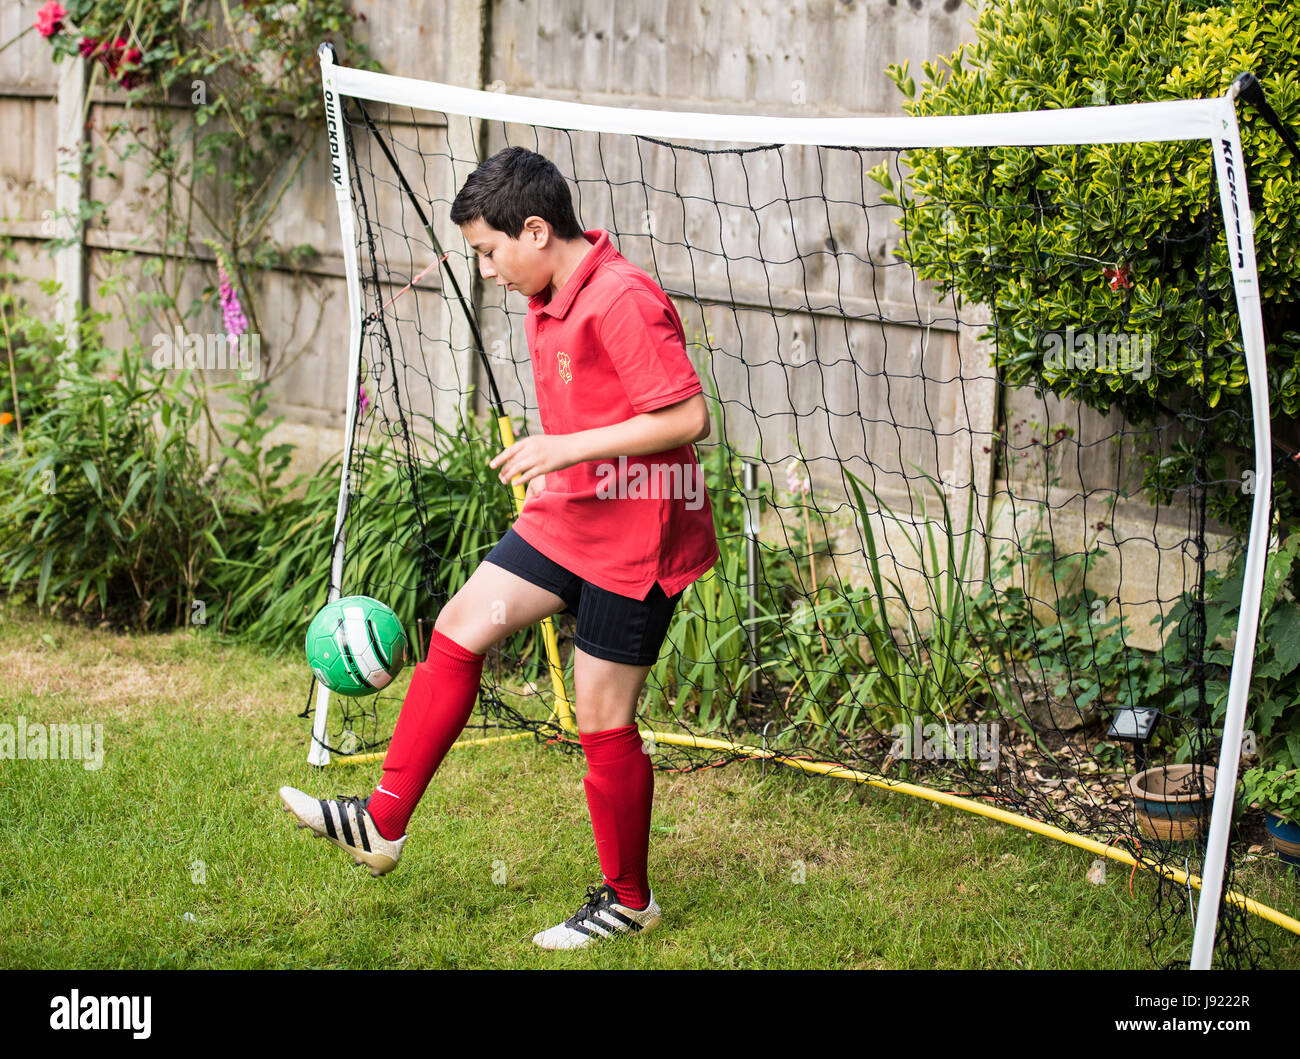 Boy plays football in garden, with goal net Stock Photo